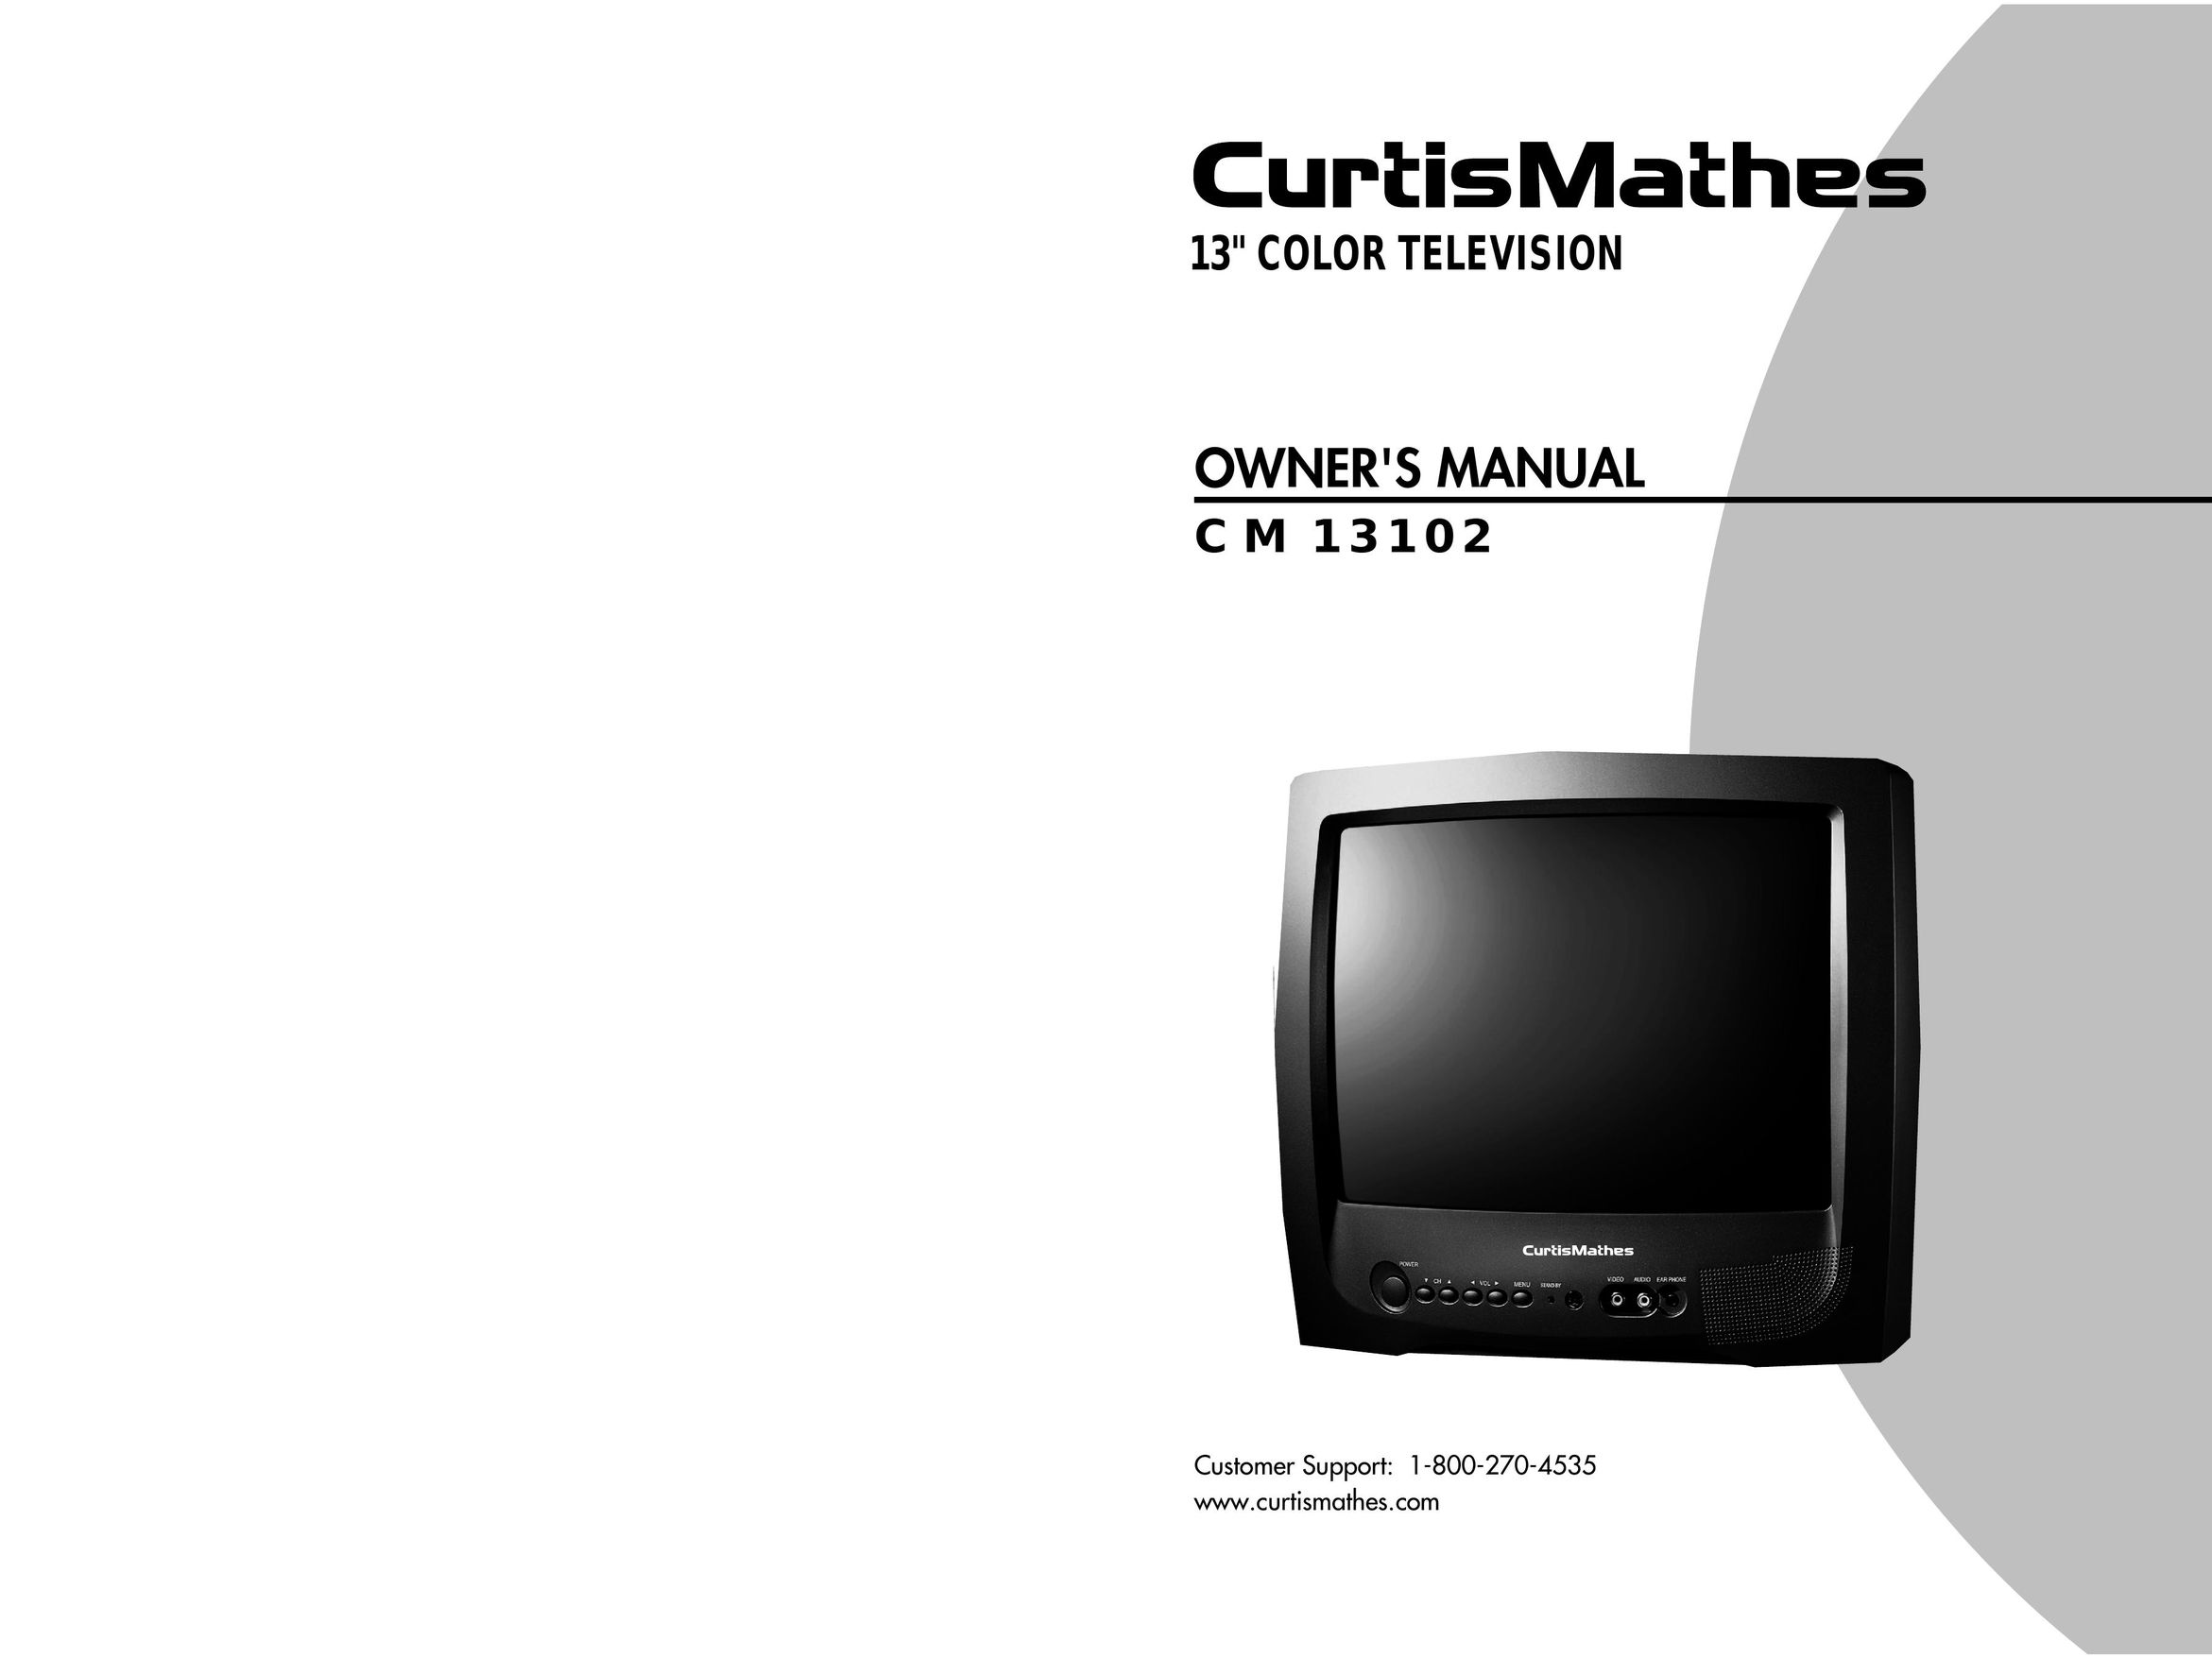 Curtis Mathes CM 13102 CRT Television User Manual